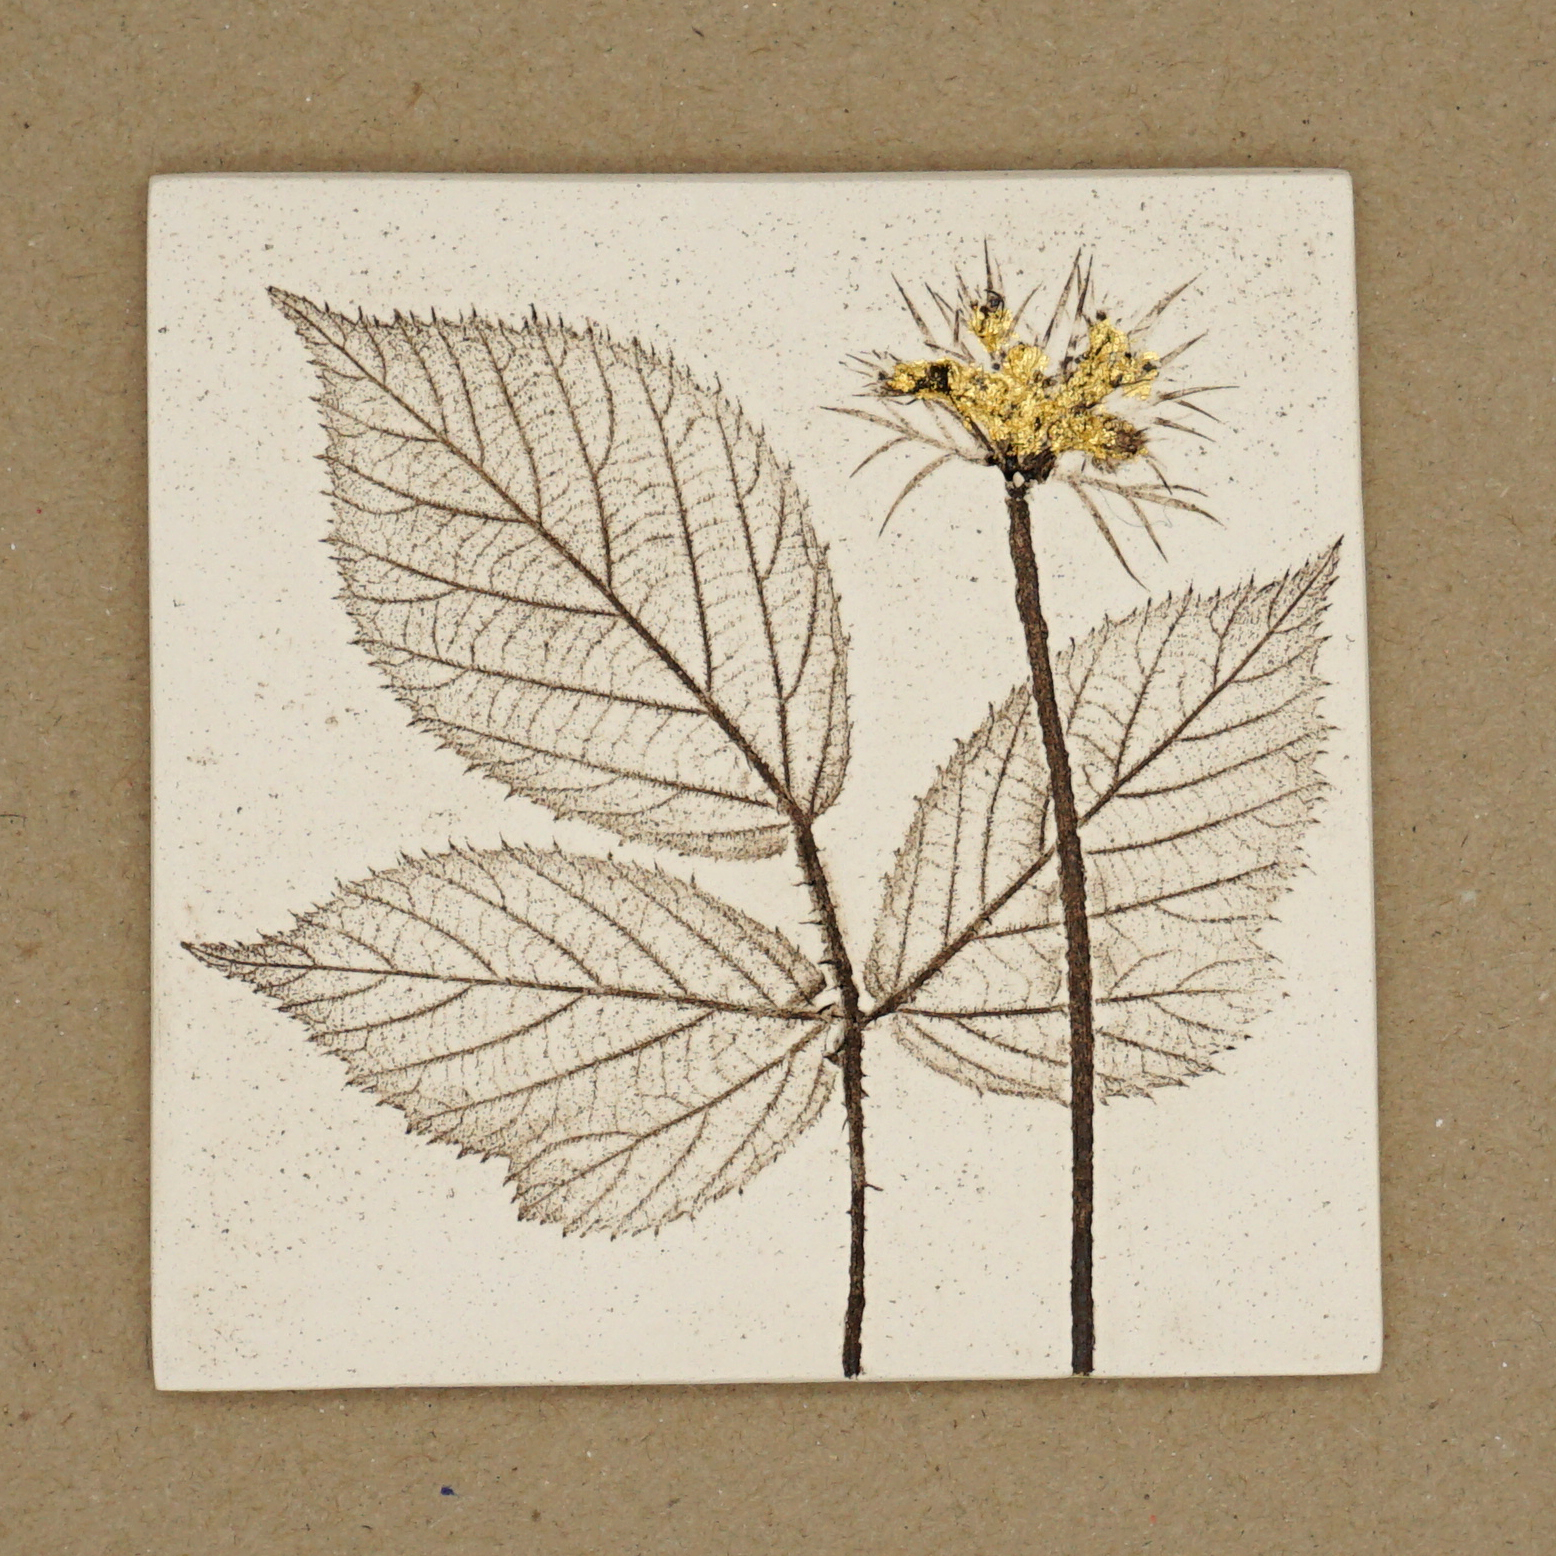 10cm Square Botanical Tile With 24ct Gold Leaf